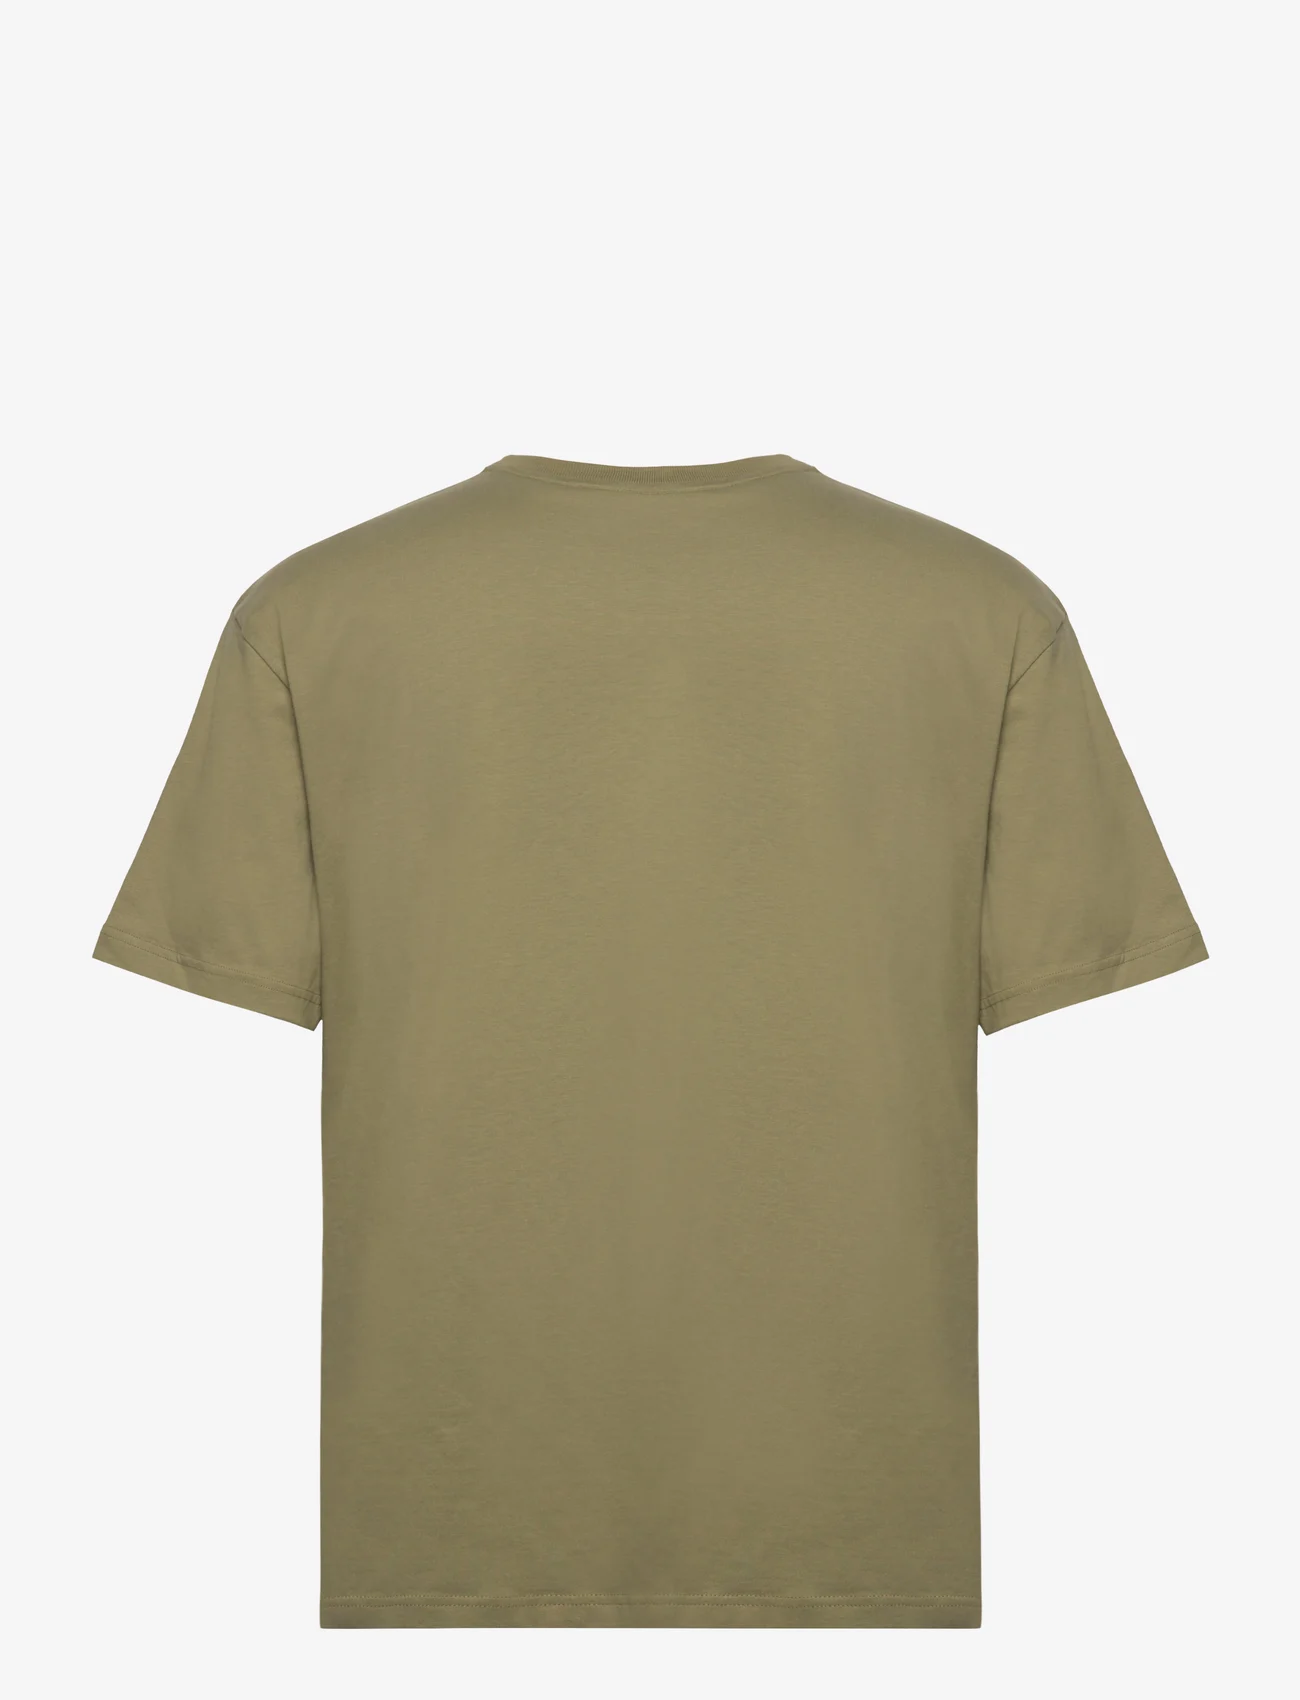 Calvin Klein - HERO LOGO COMFORT T-SHIRT - basic t-shirts - delta green - 1